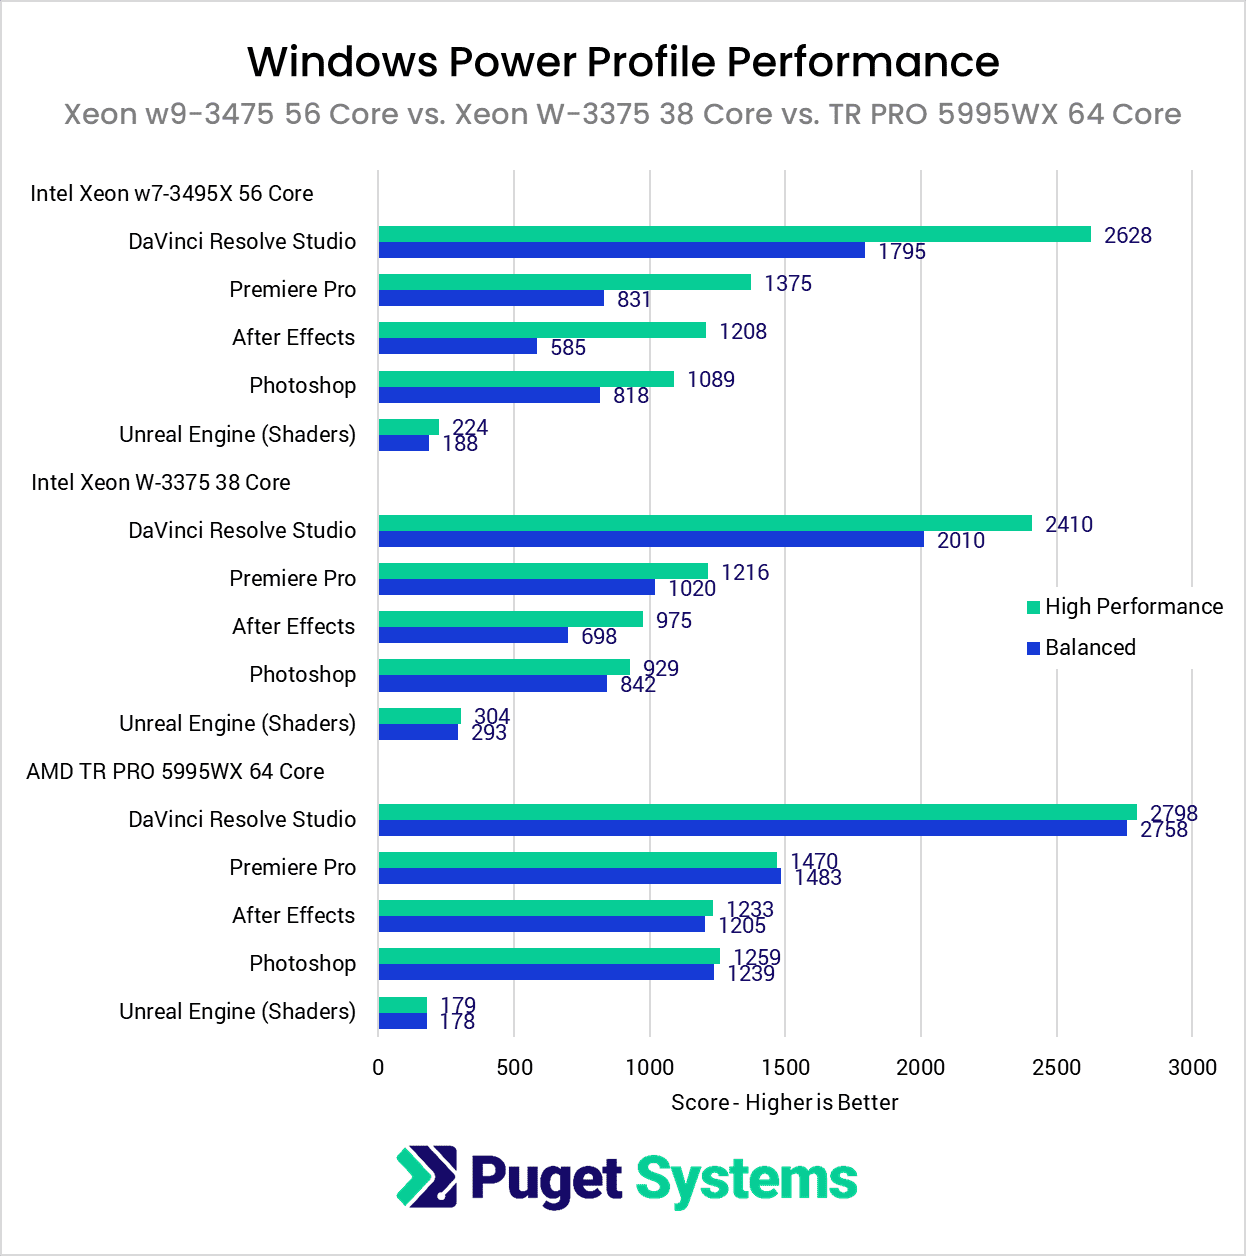 Windows Power Profile Performance w9-3495 vs W-3375 vs 5995WX